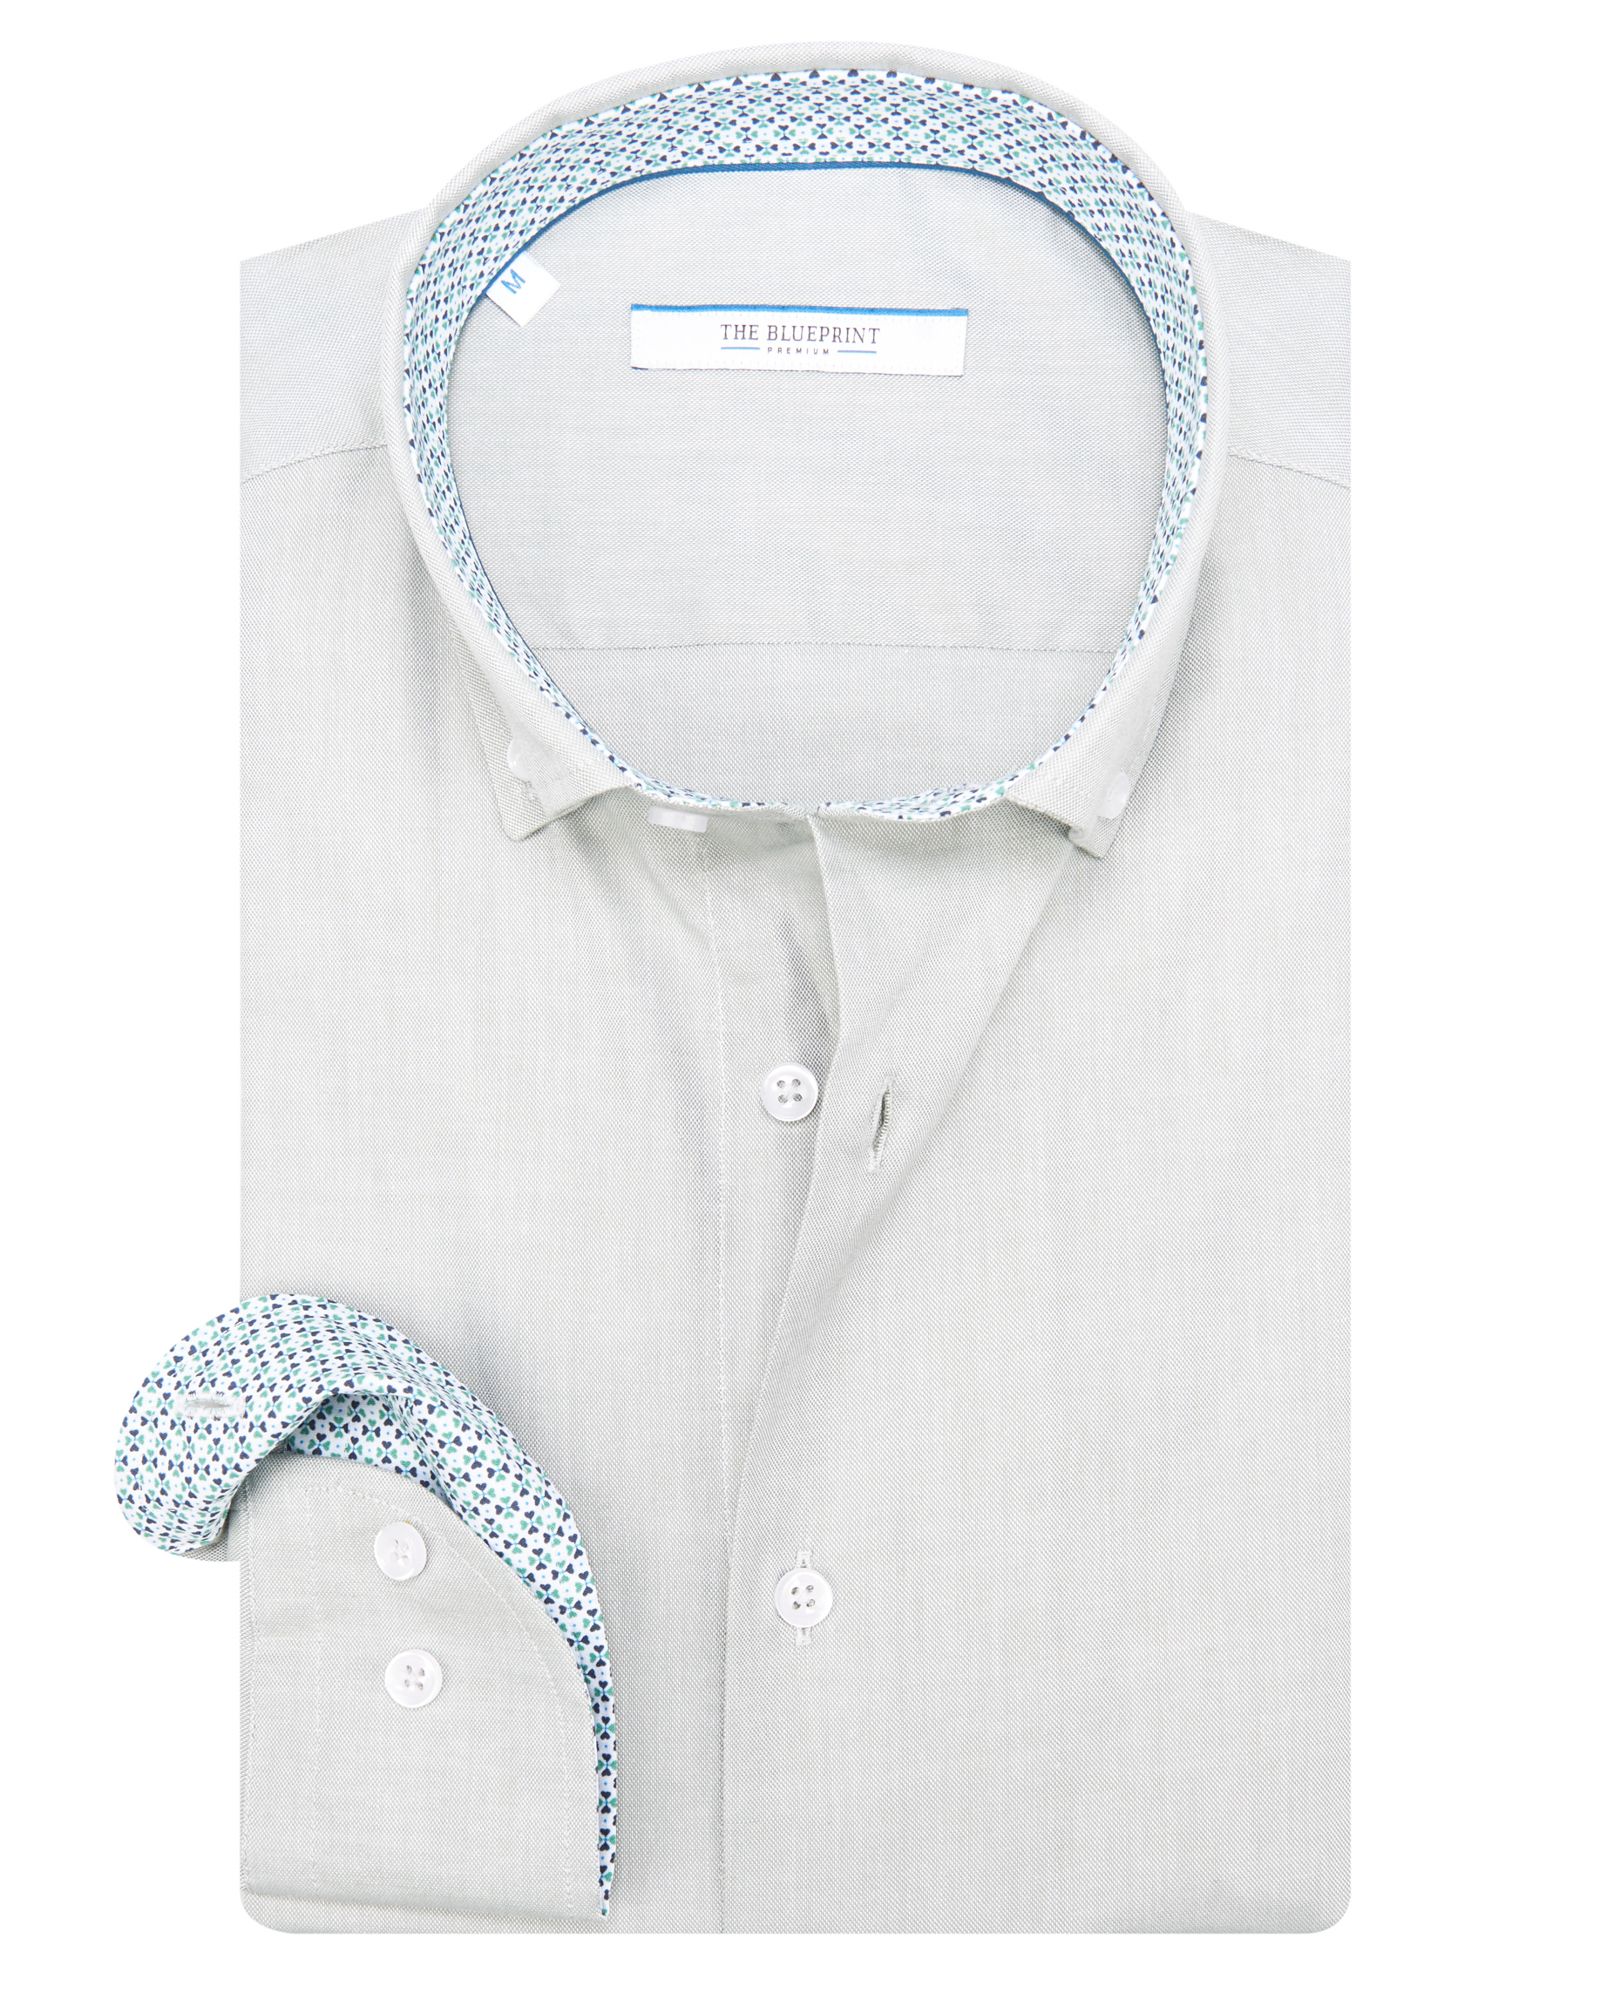 The BLUEPRINT Premium Casual Overhemd LM Groen uni 082219-001-L